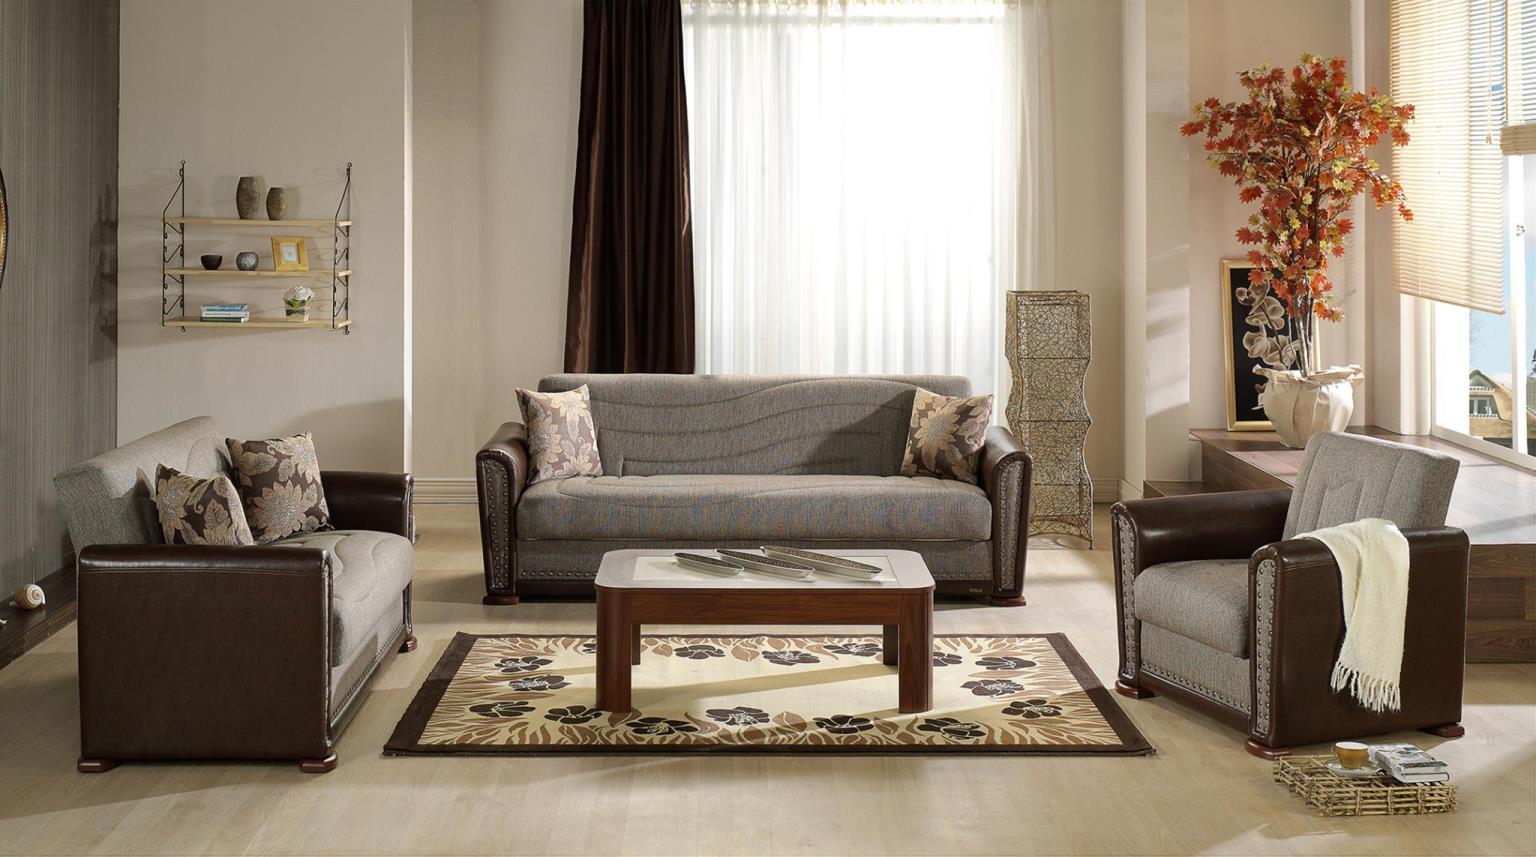 ALFA - LIVING ROOM - 3 ITEMS - Berre Furniture